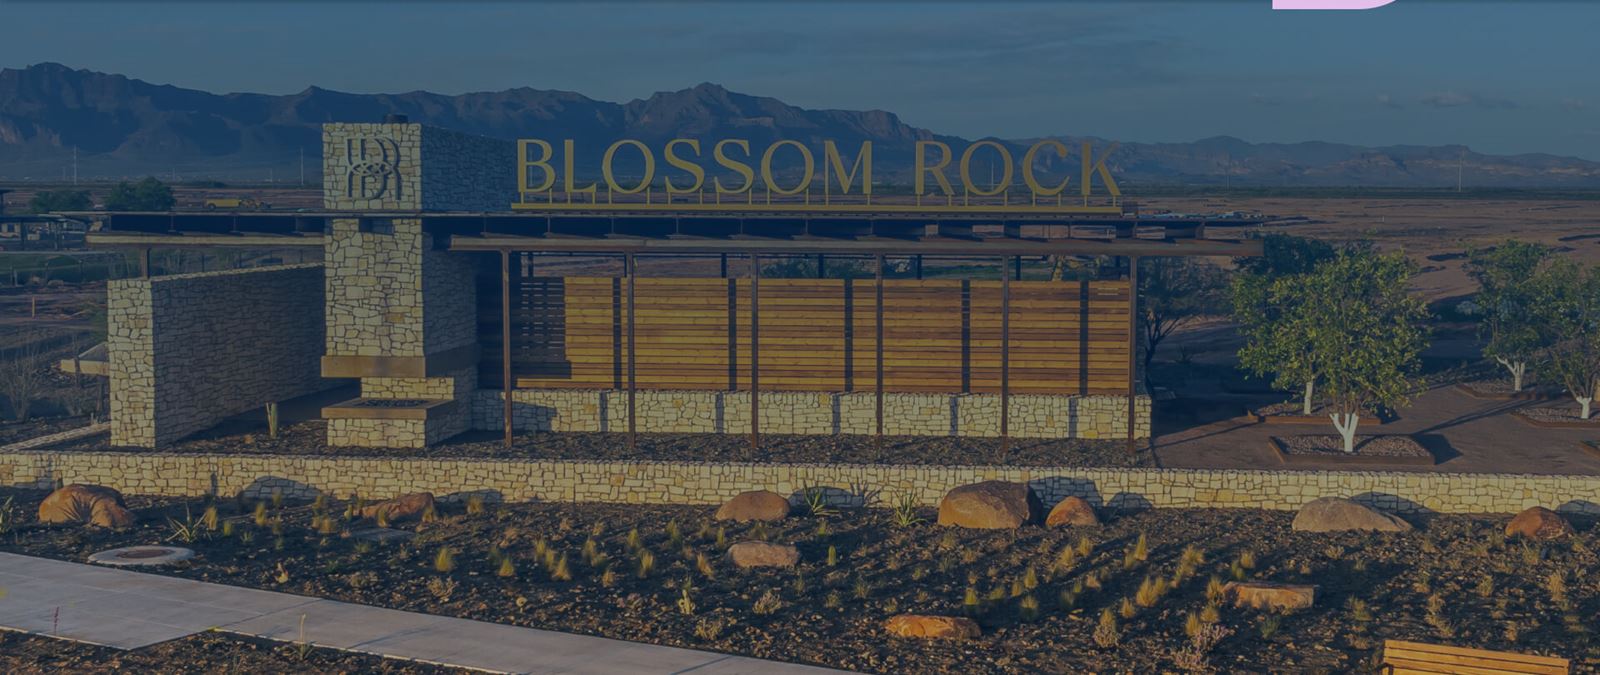 Blossom Rock Community Entrance East Valley Apache Junction Arizona